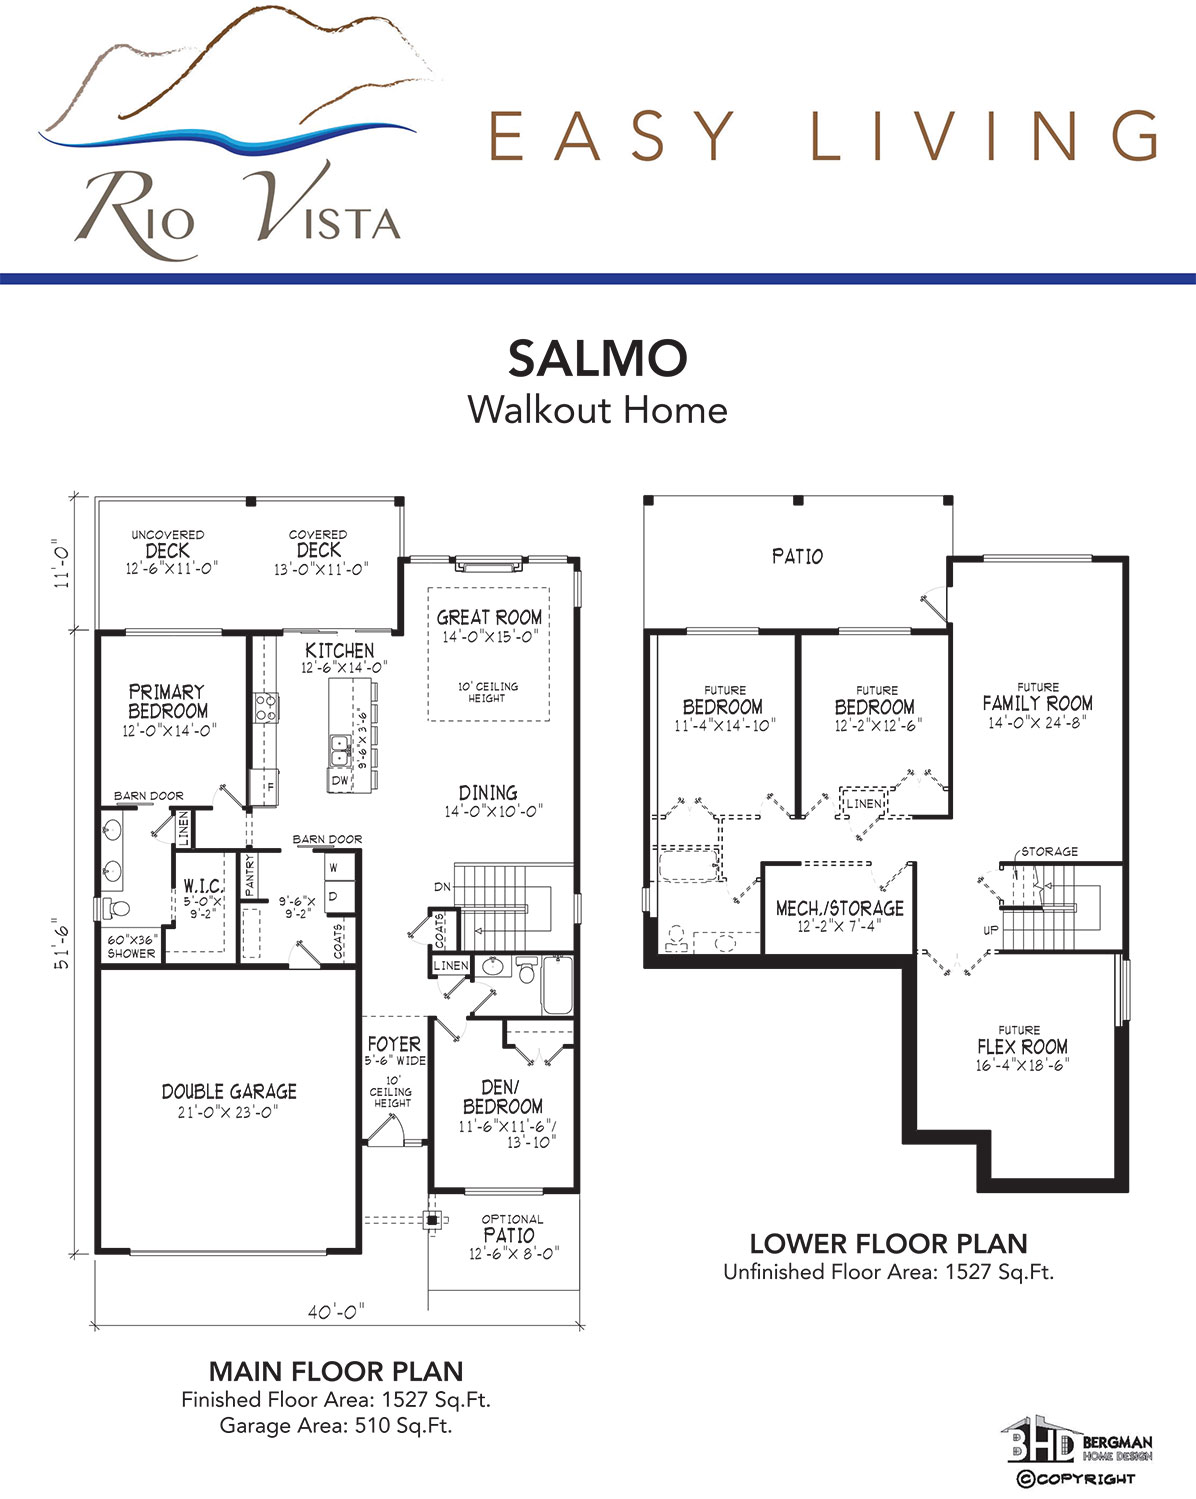 Rio Vista - Salmo Walkout Home Layout